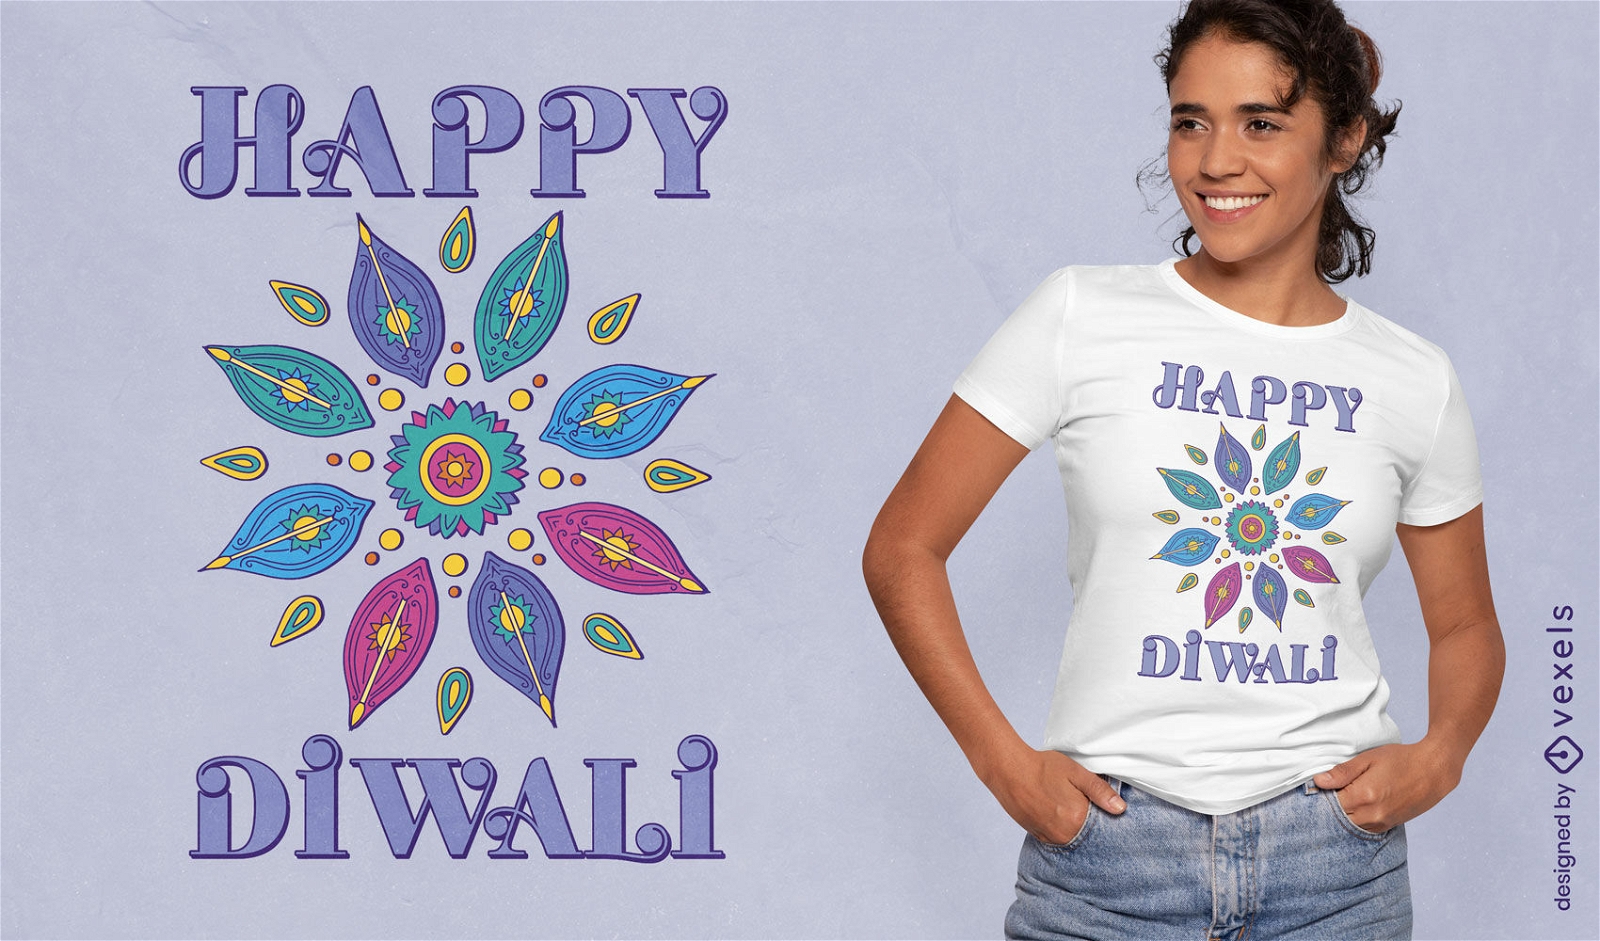 Diwali celebration with candles t-shirt design